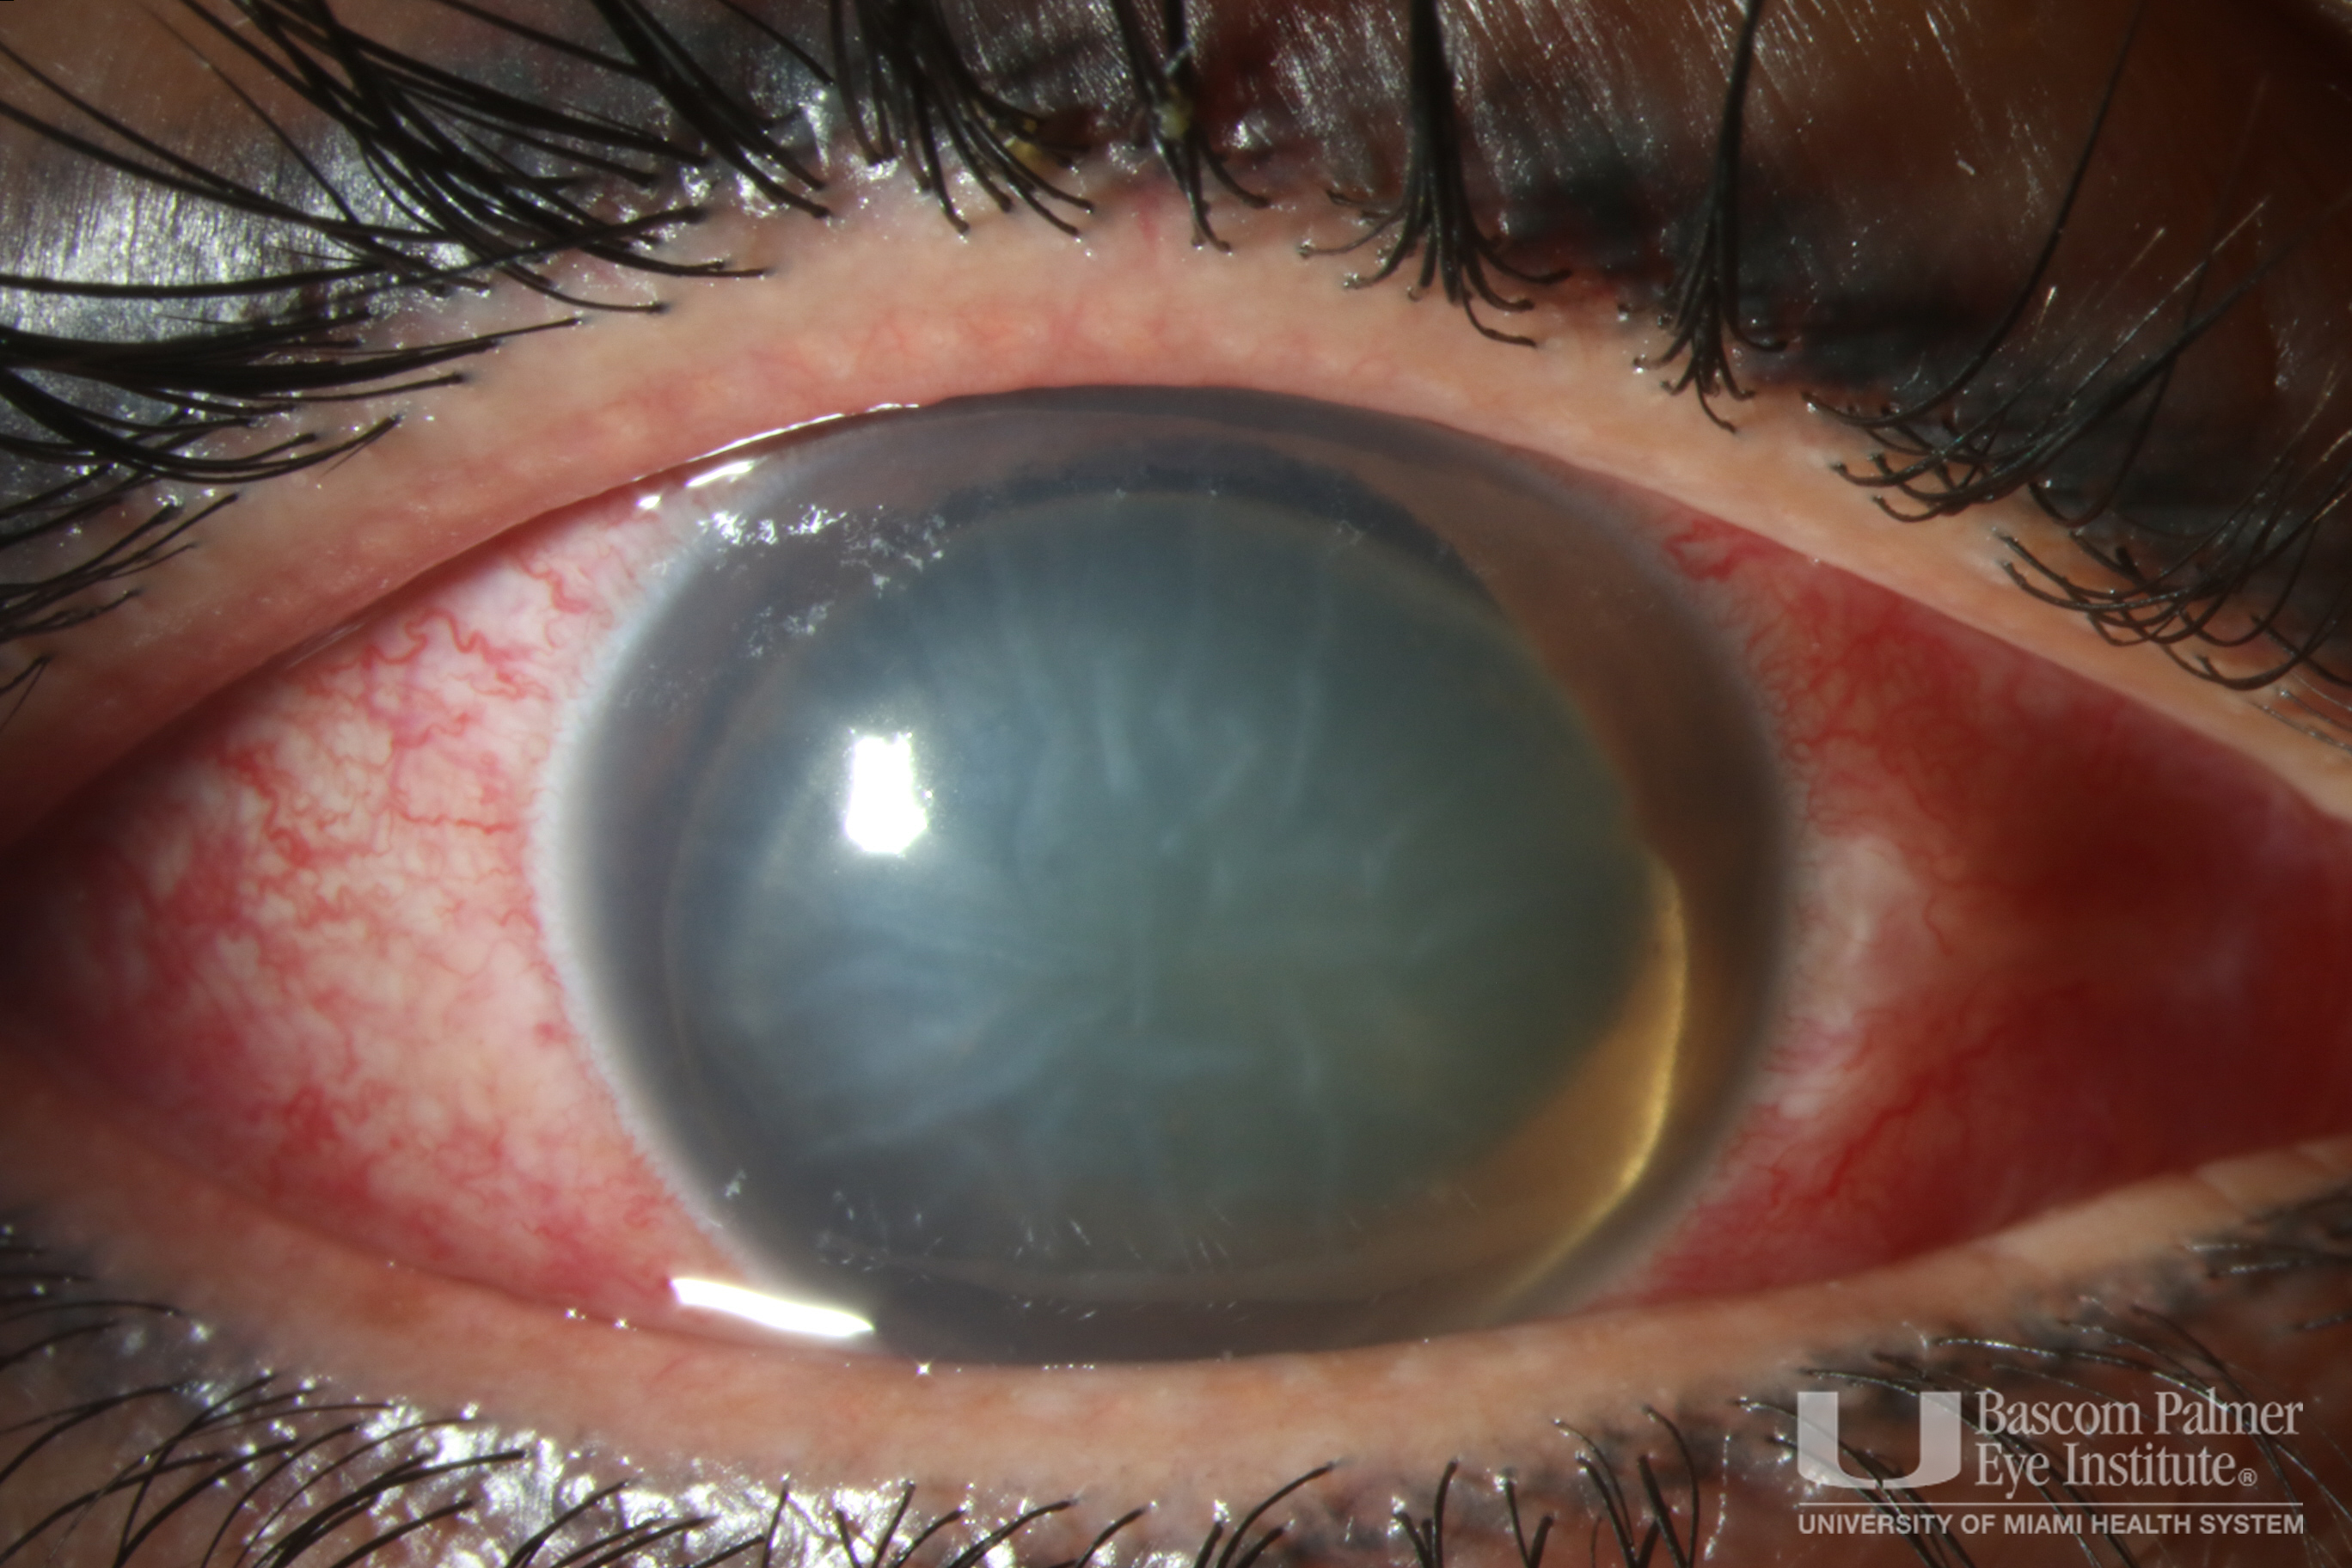 Anterior Dislocation of Cystalline Lens With Corneal Edema